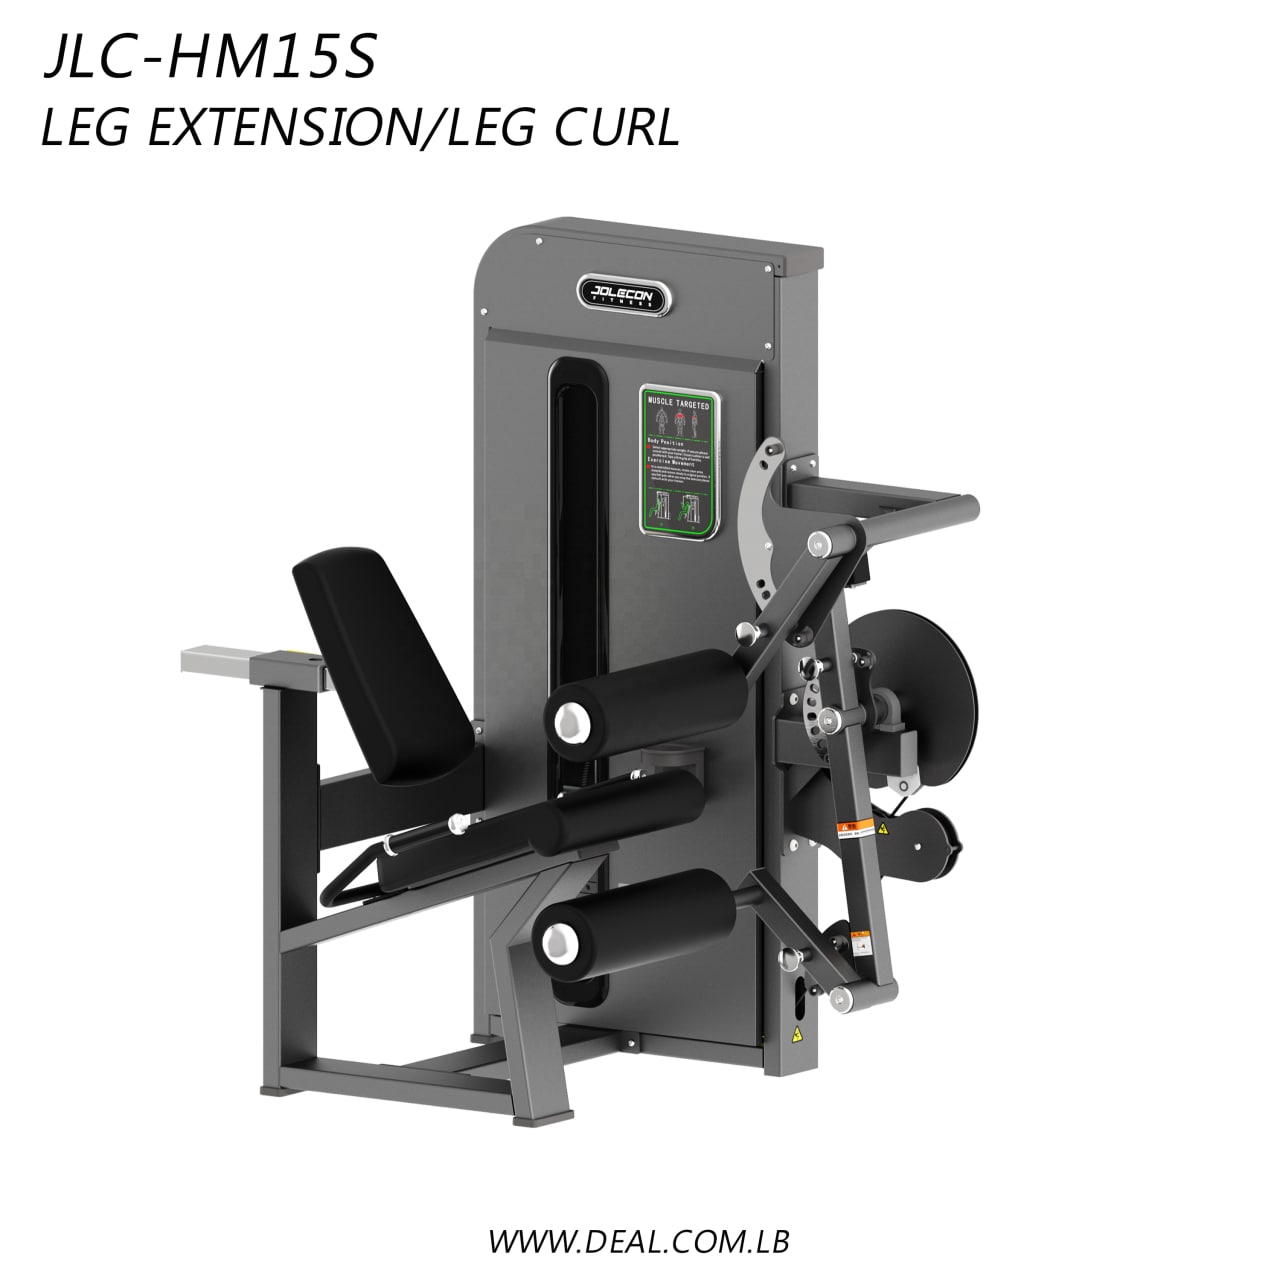 JLC-HM15S | Leg Extension Leg Curl